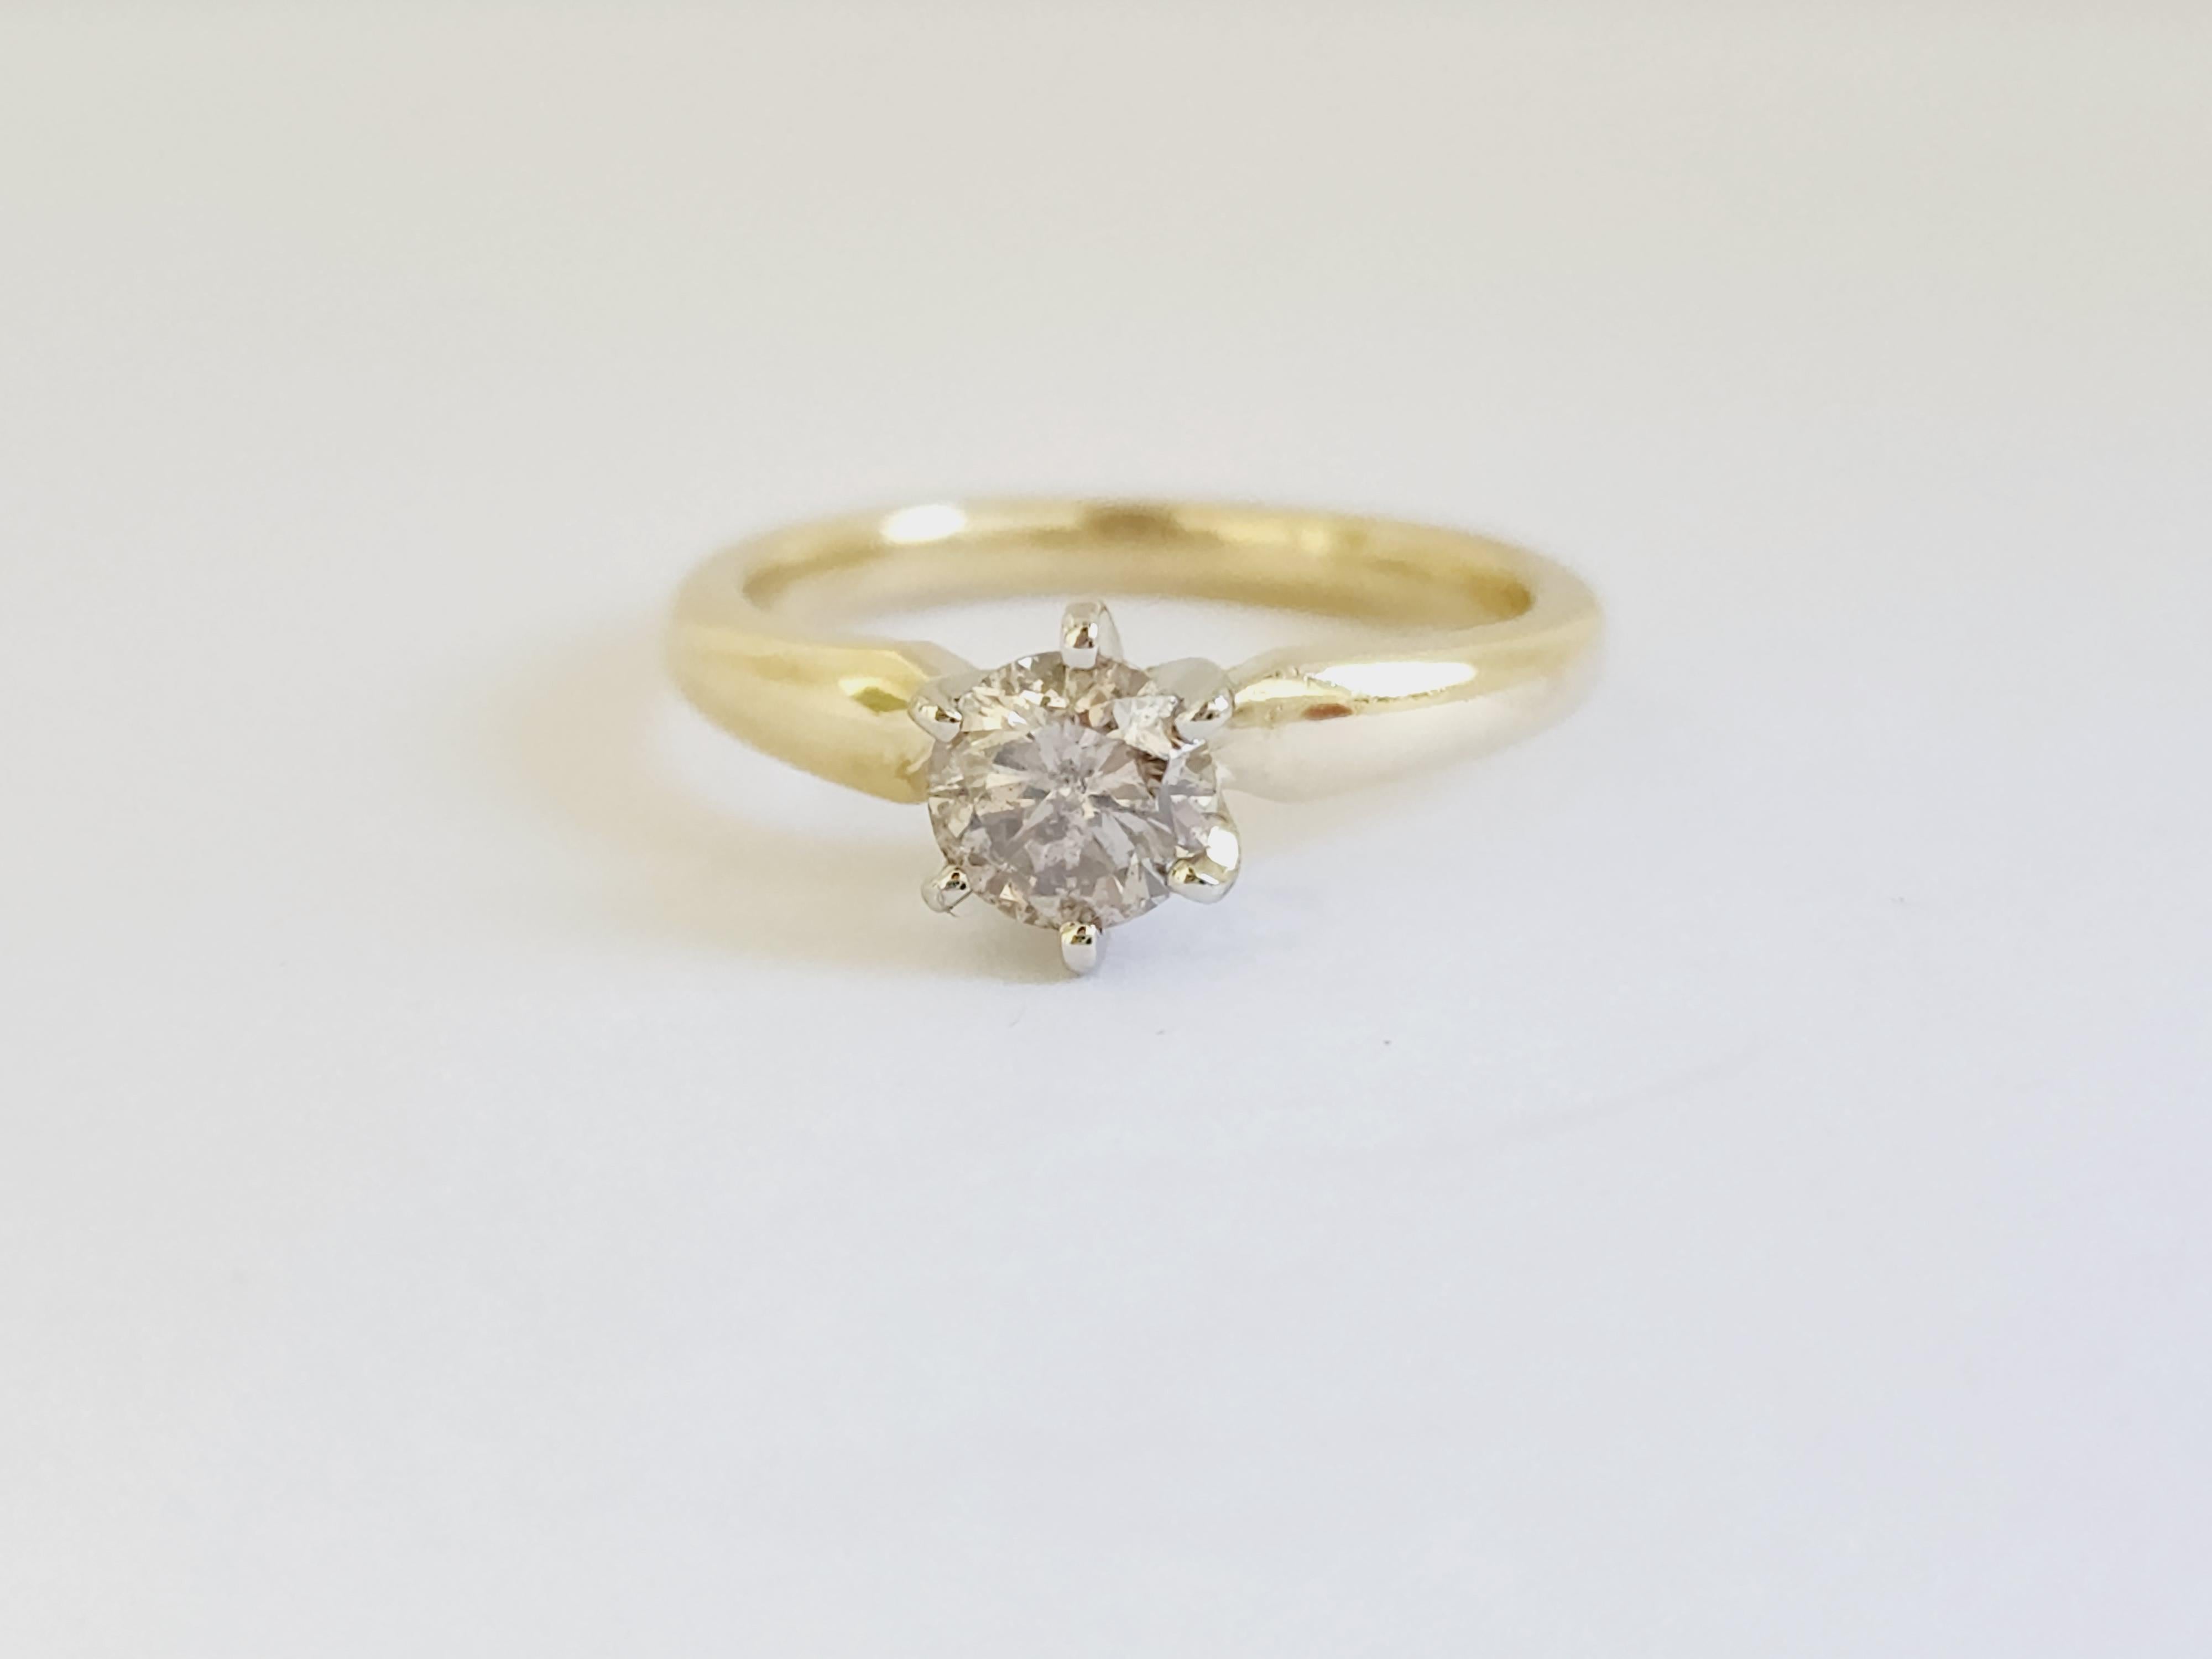 Natural Light brown round diamond weighing 0.76 carats. 
Set on 6-prong 14K yellow gold.
Ring size: 6.5